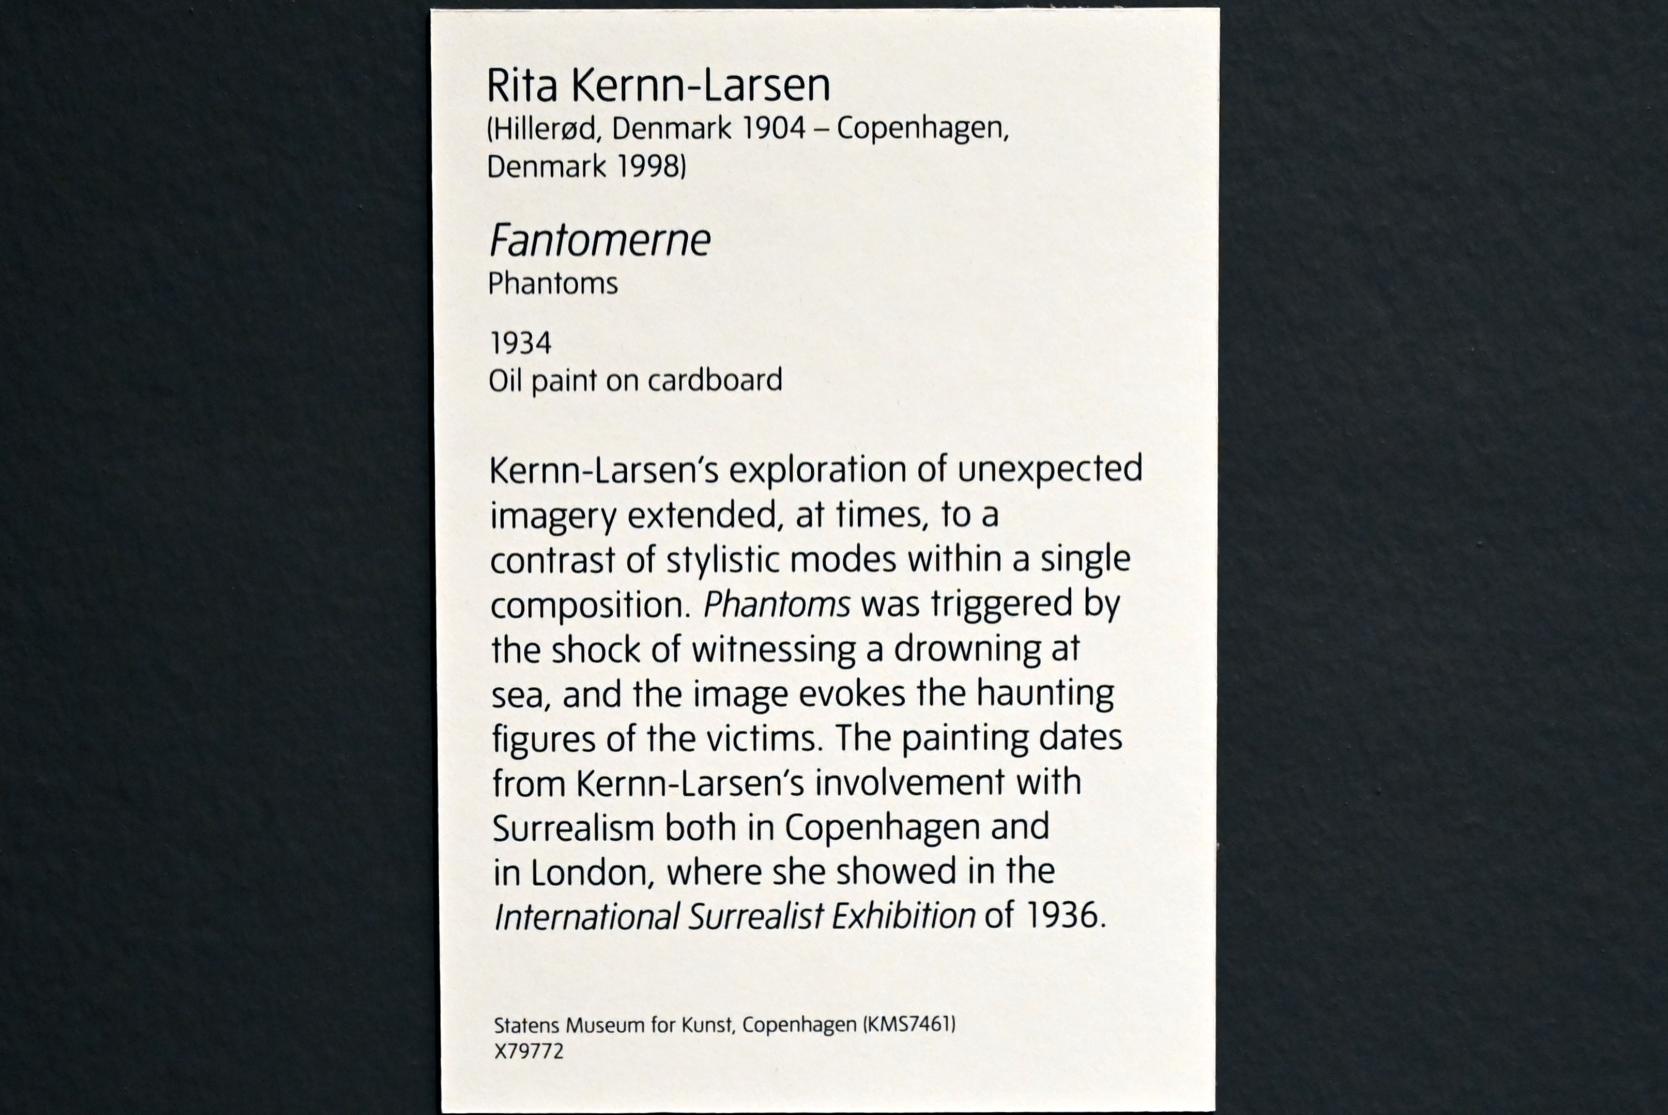 Rita Kernn-Larsen (1934), Phantome, London, Tate Modern, Ausstellung "Surrealism Beyond Borders" vom 24.02.-29.08.2022, Saal 3, 1934, Bild 2/2